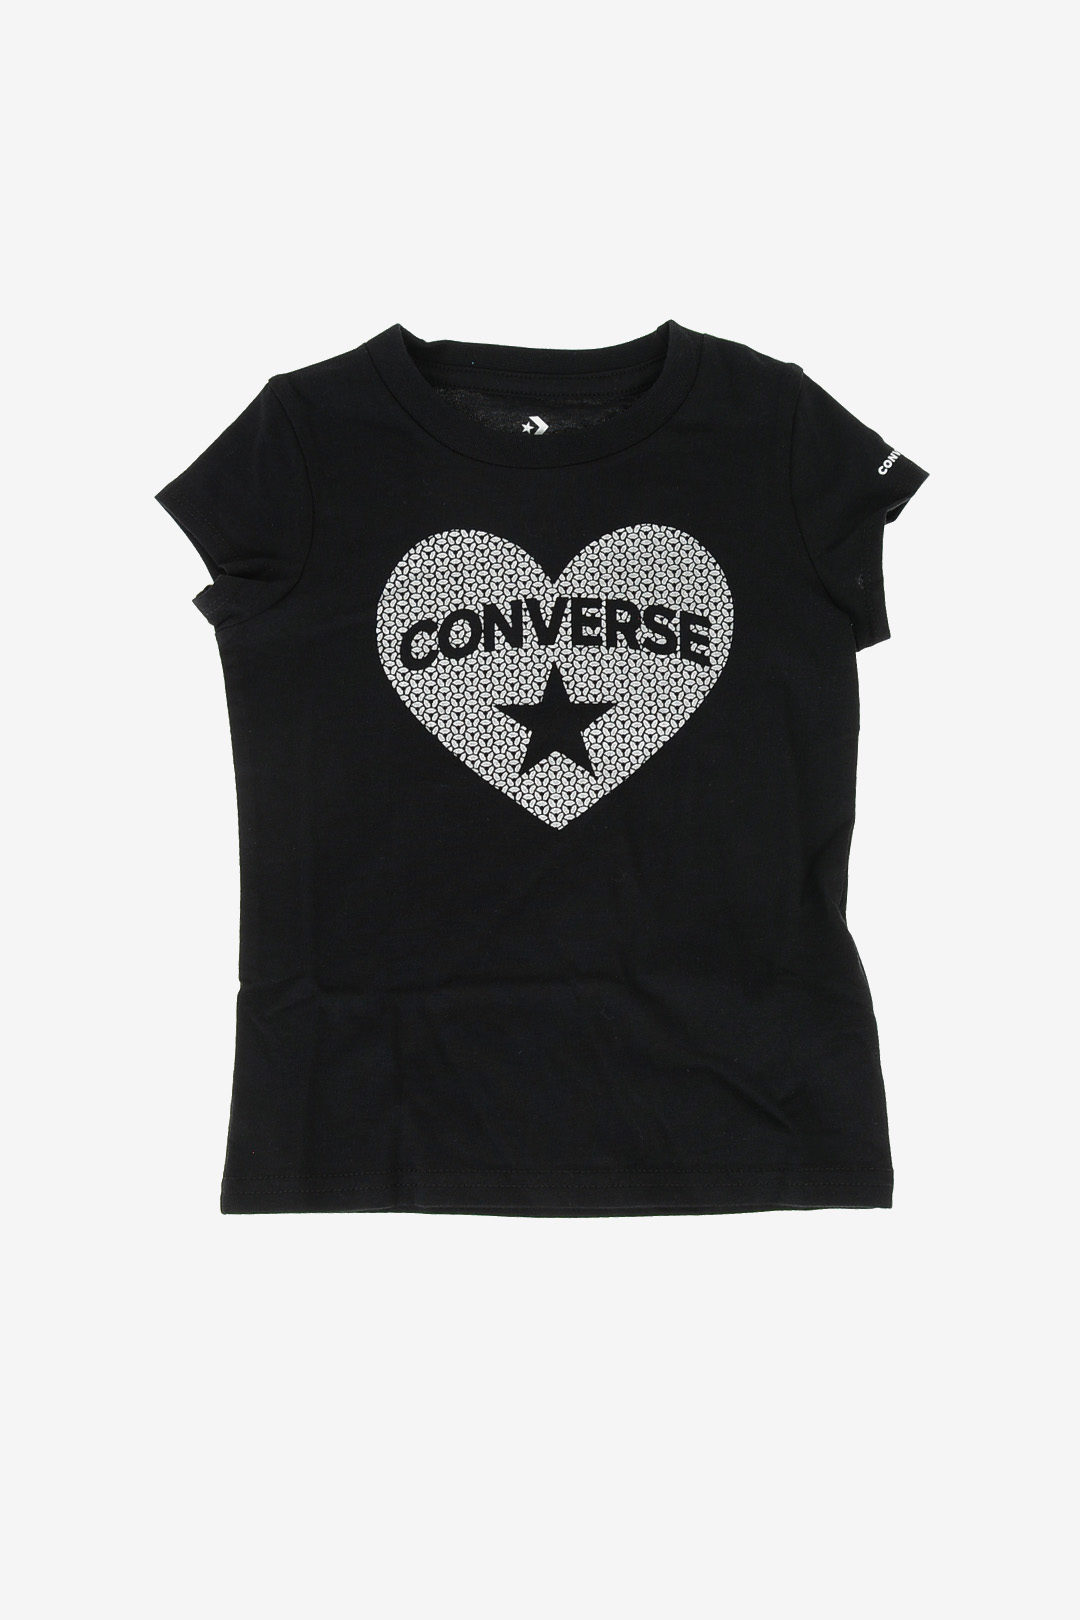 Converse KIDS Heart Printed T-shirt 